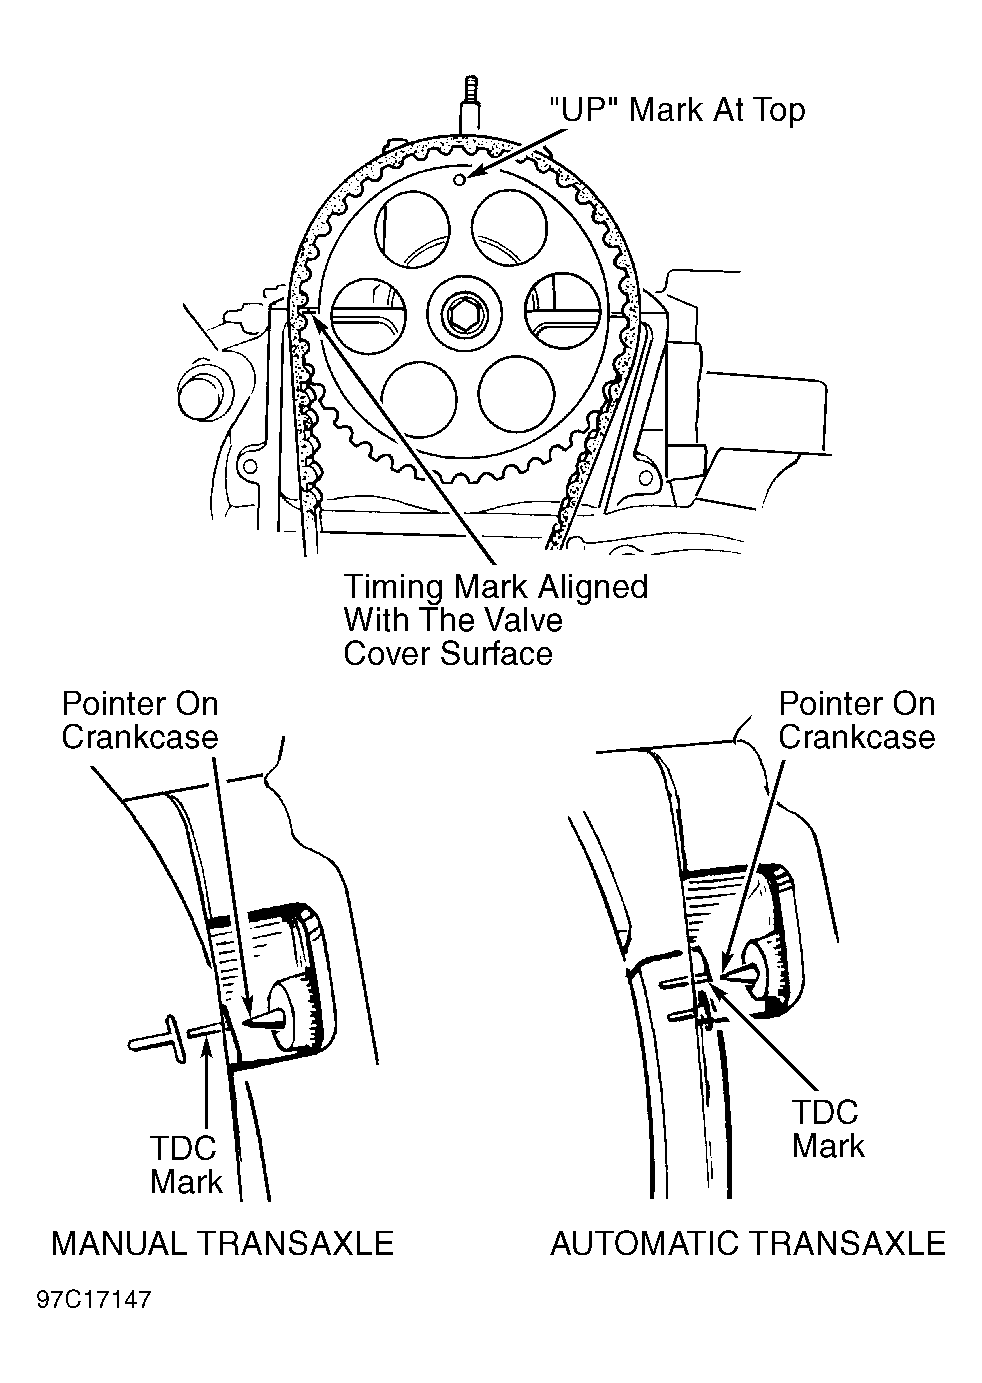 1994 Honda Civic Serpentine Belt Routing and Timing Belt Diagrams